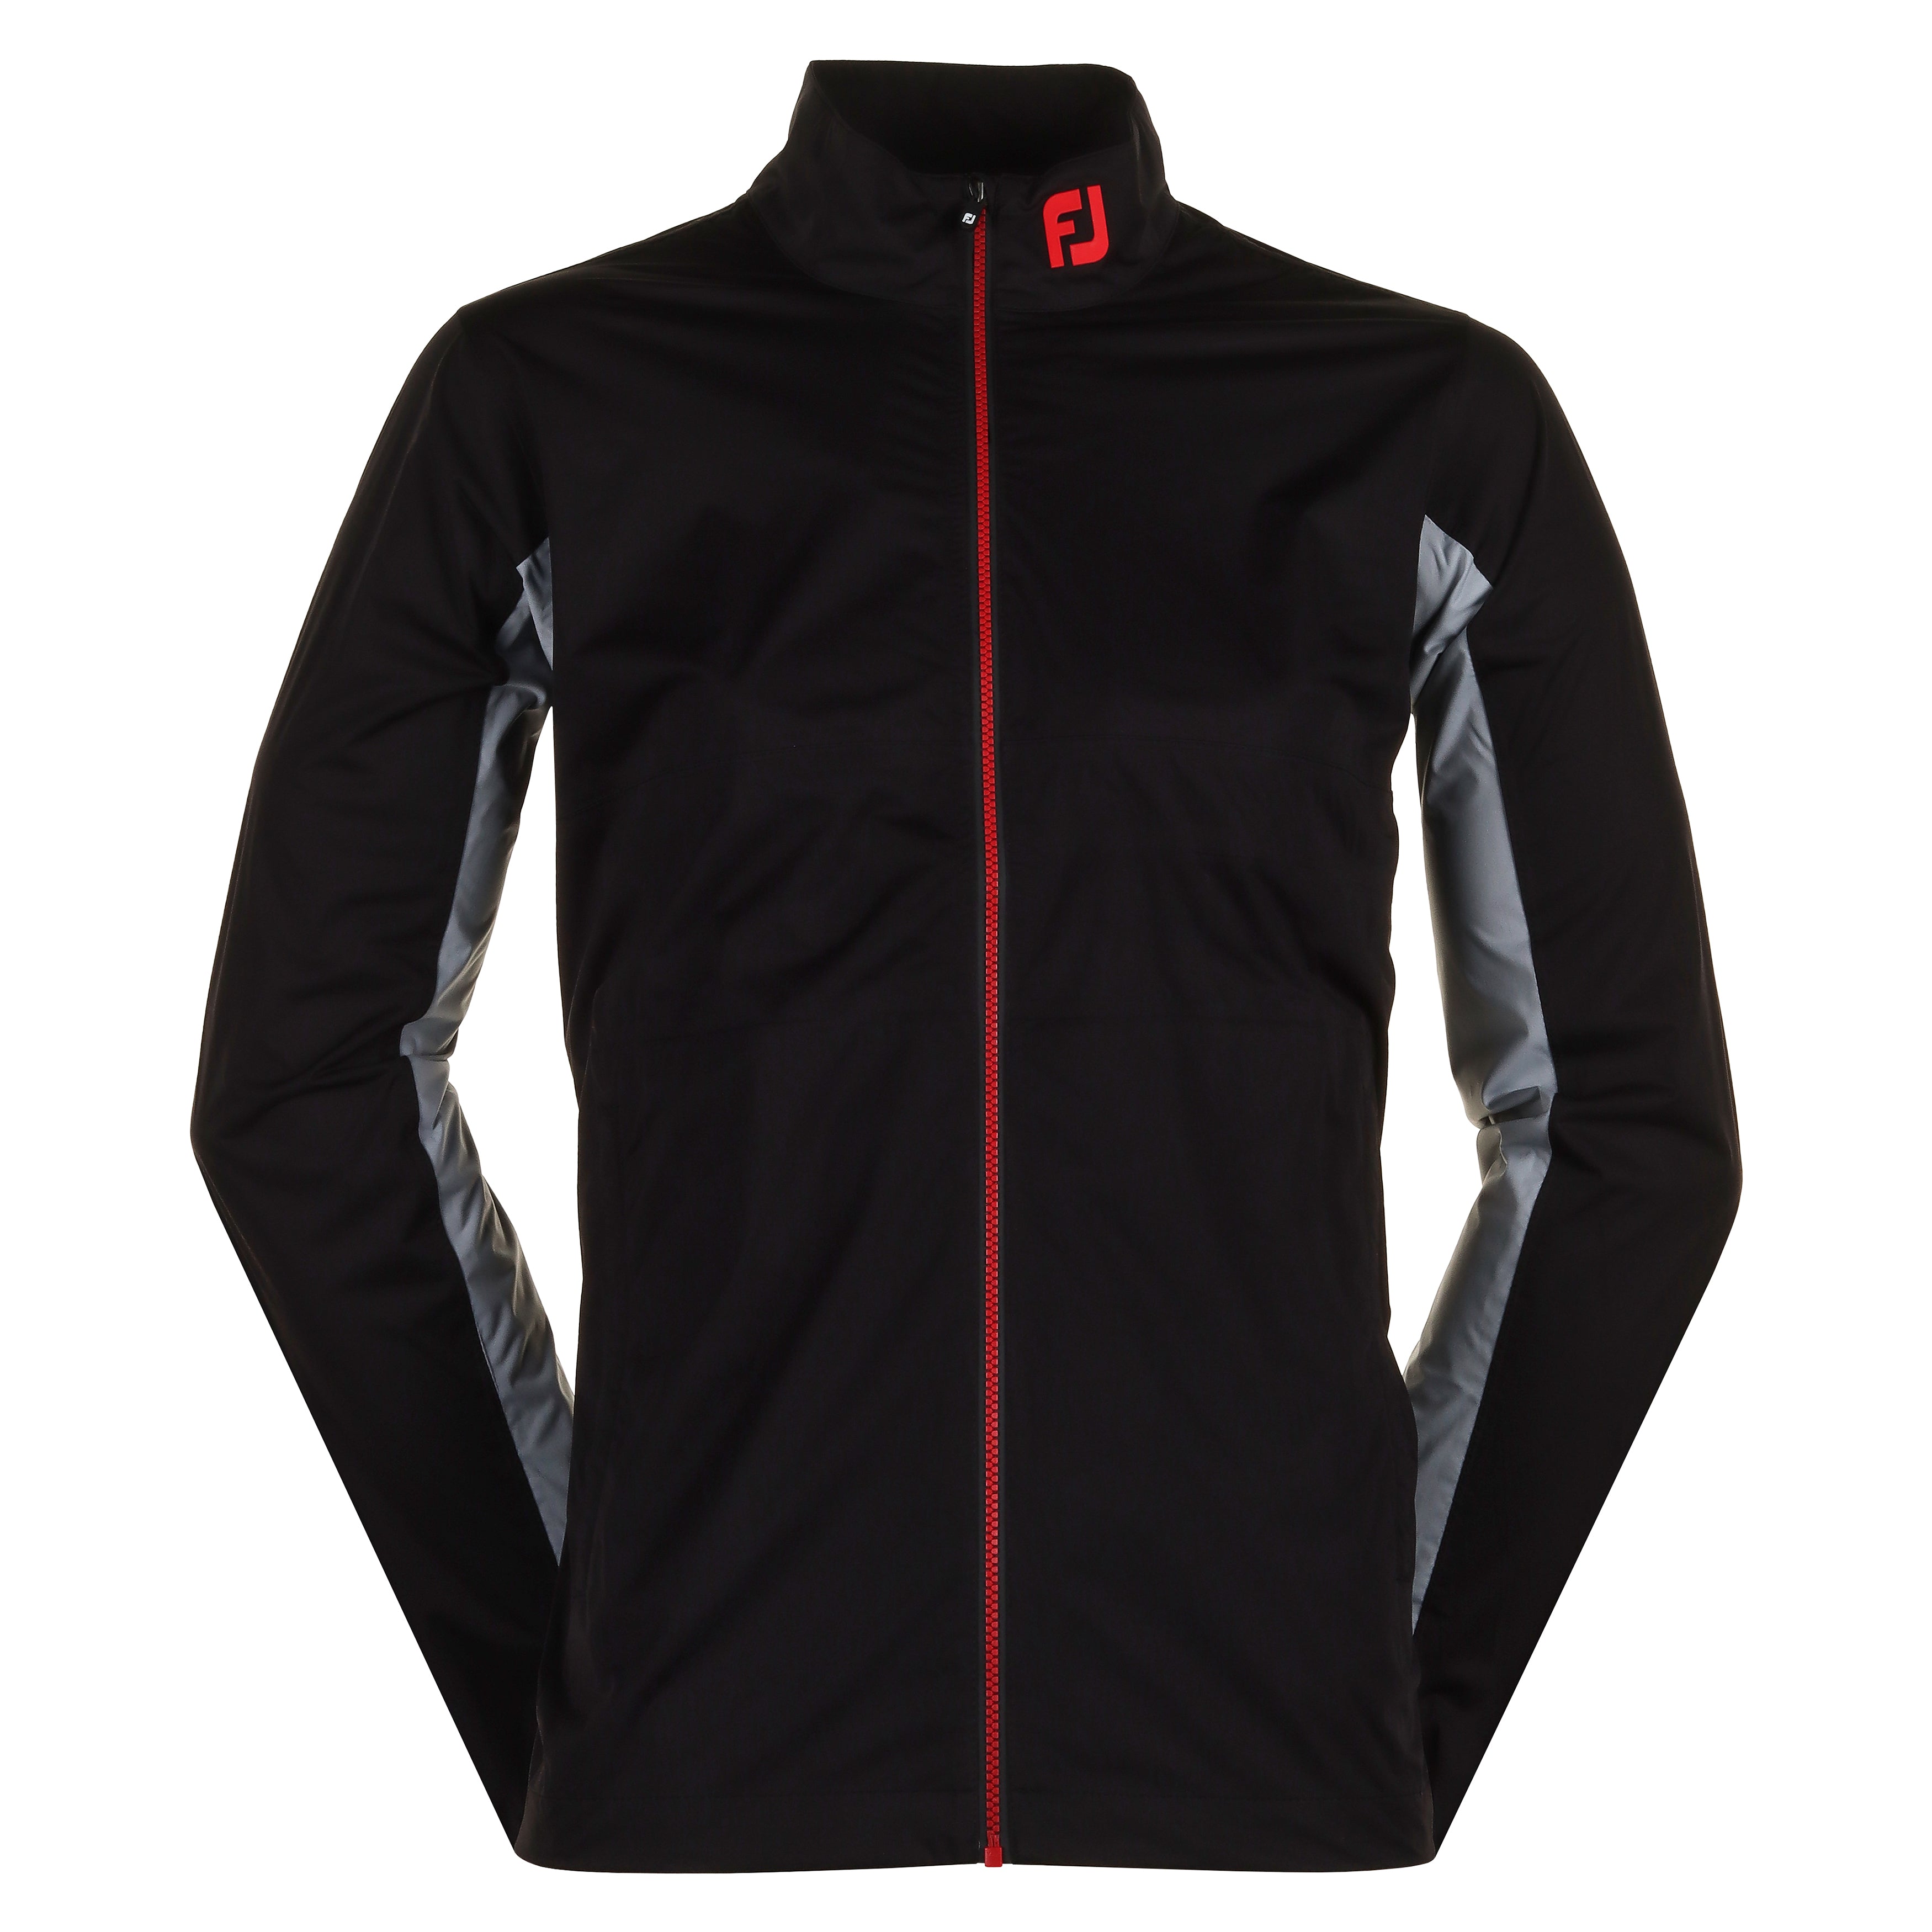 FootJoy Golf HydroKnit Jacket 87980 Black Grey Bright Red | Function18